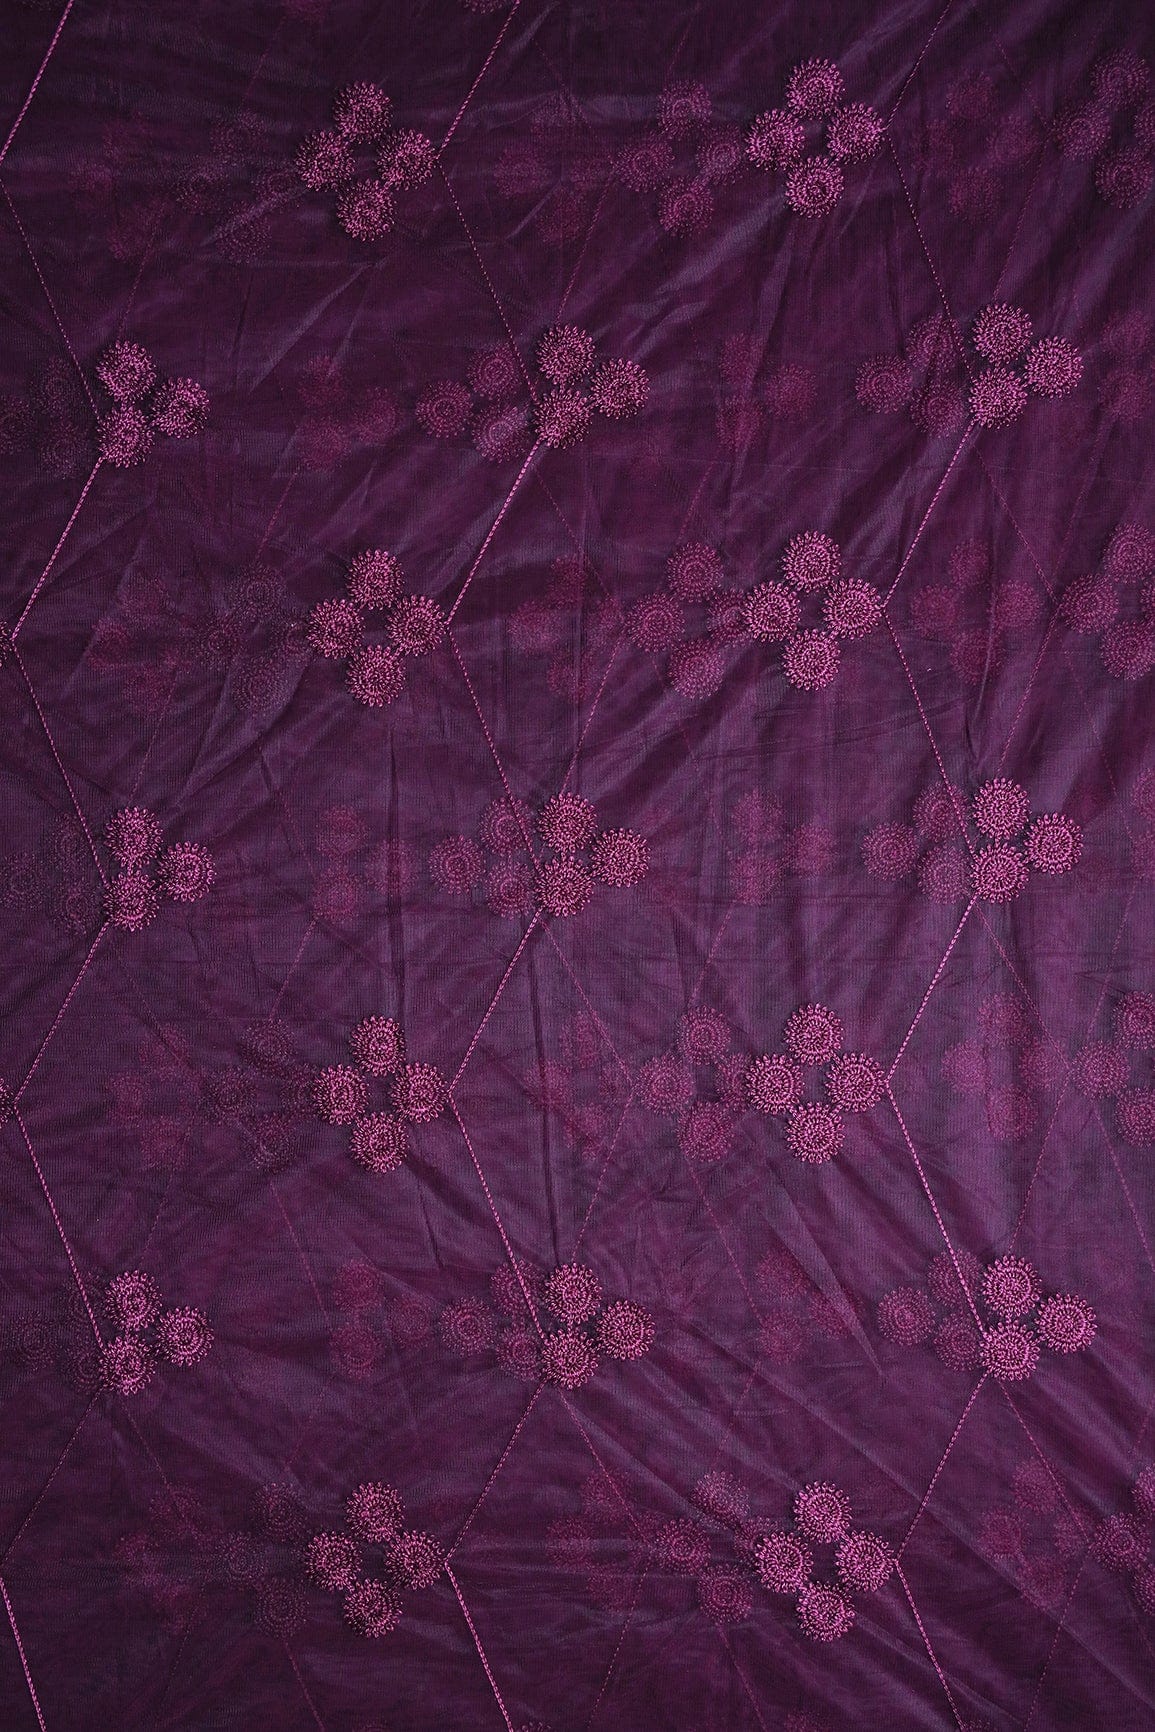 doeraa Embroidery Fabrics Wine Color Thread Geometric Embroidery Work On Wine Soft Net Fabric